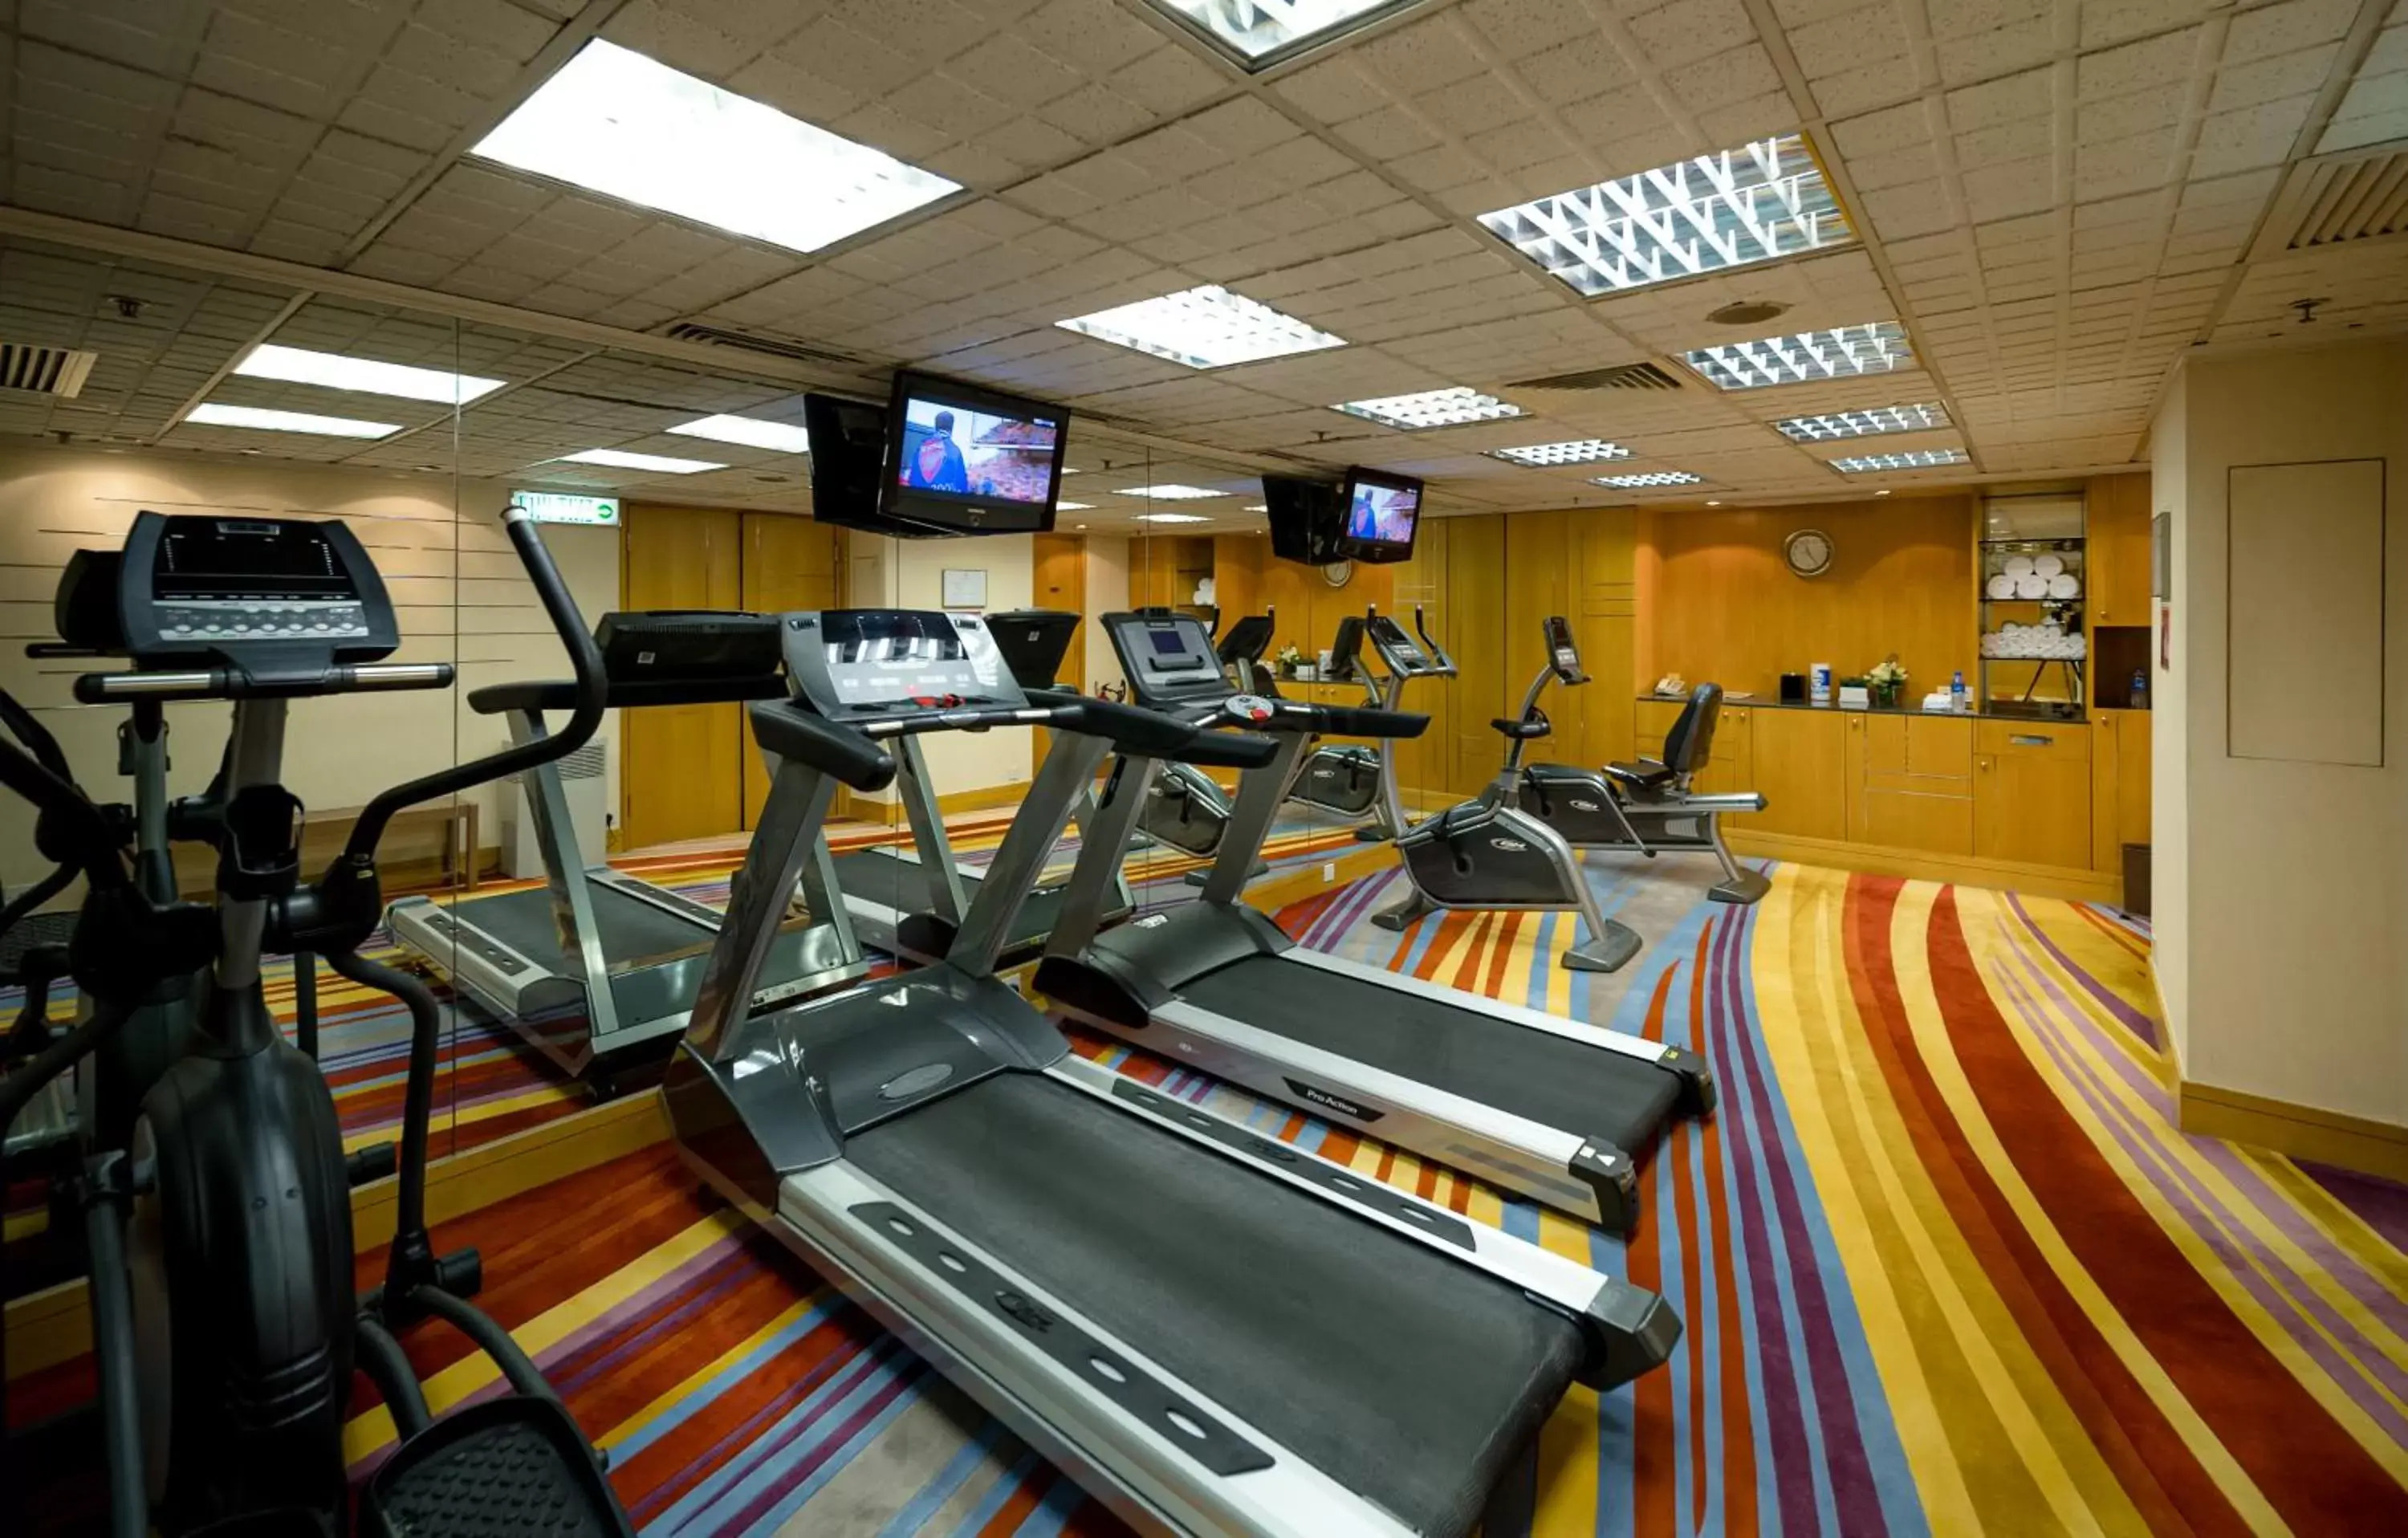 Fitness centre/facilities, Fitness Center/Facilities in Gloucester Luk Kwok Hong Kong